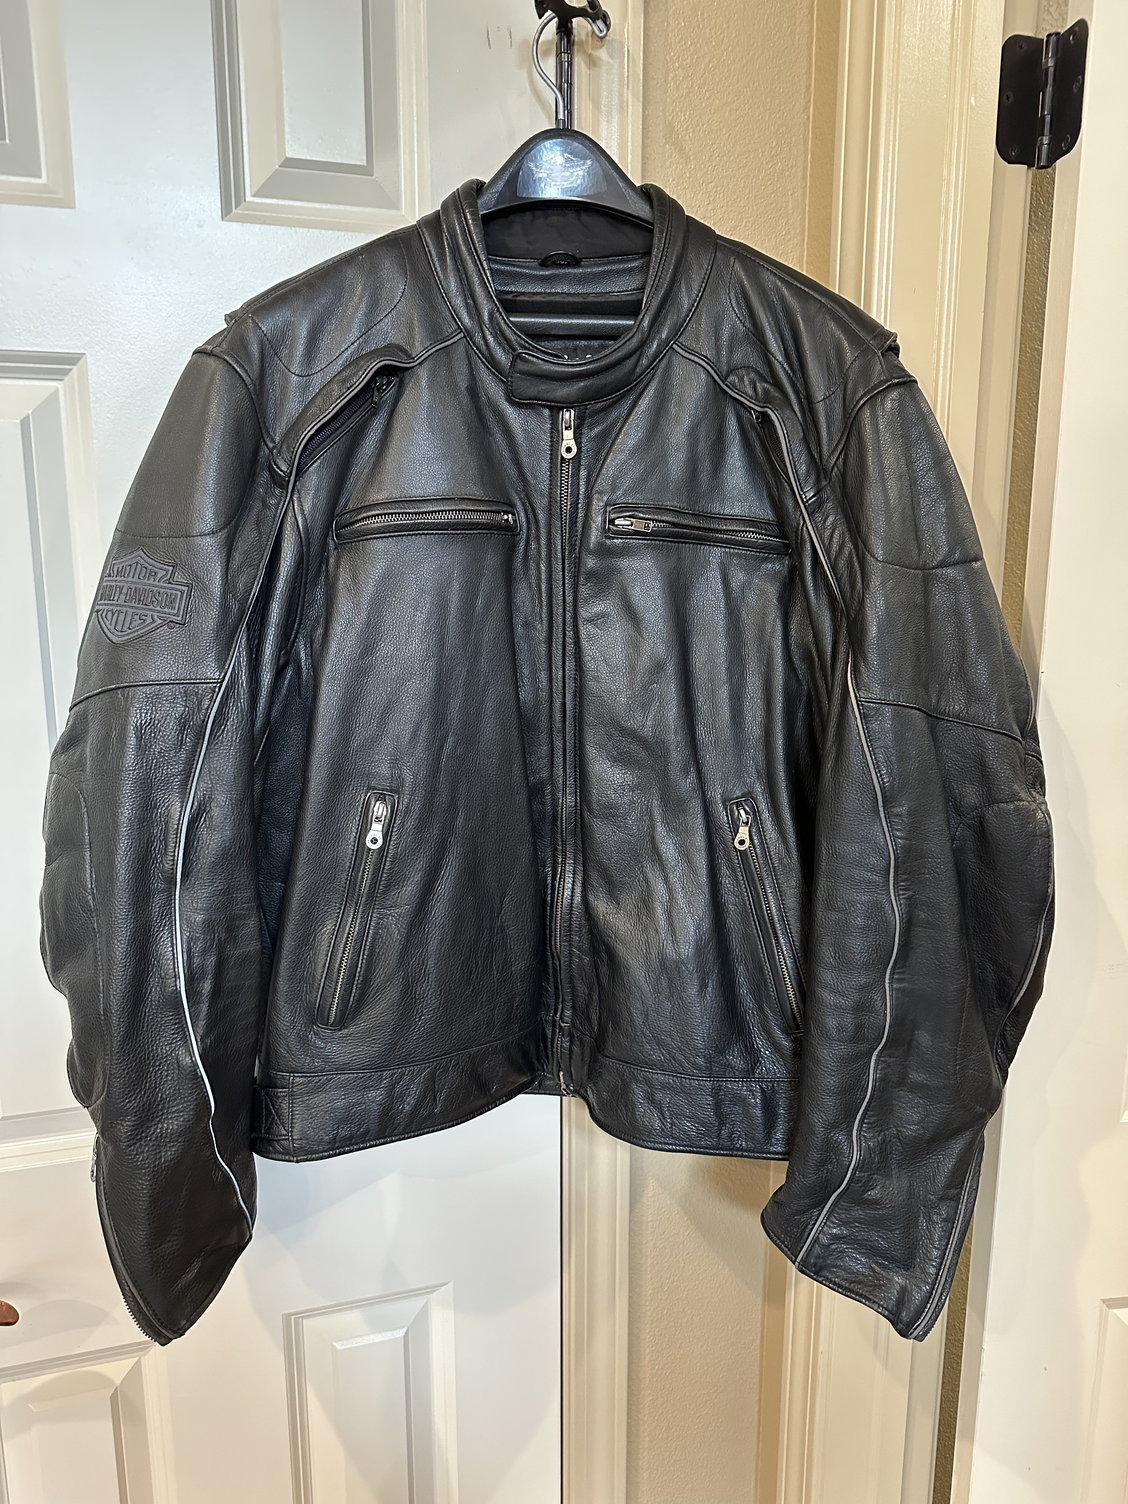 HD Willie G Leather Riding Jacket - Harley Davidson Forums